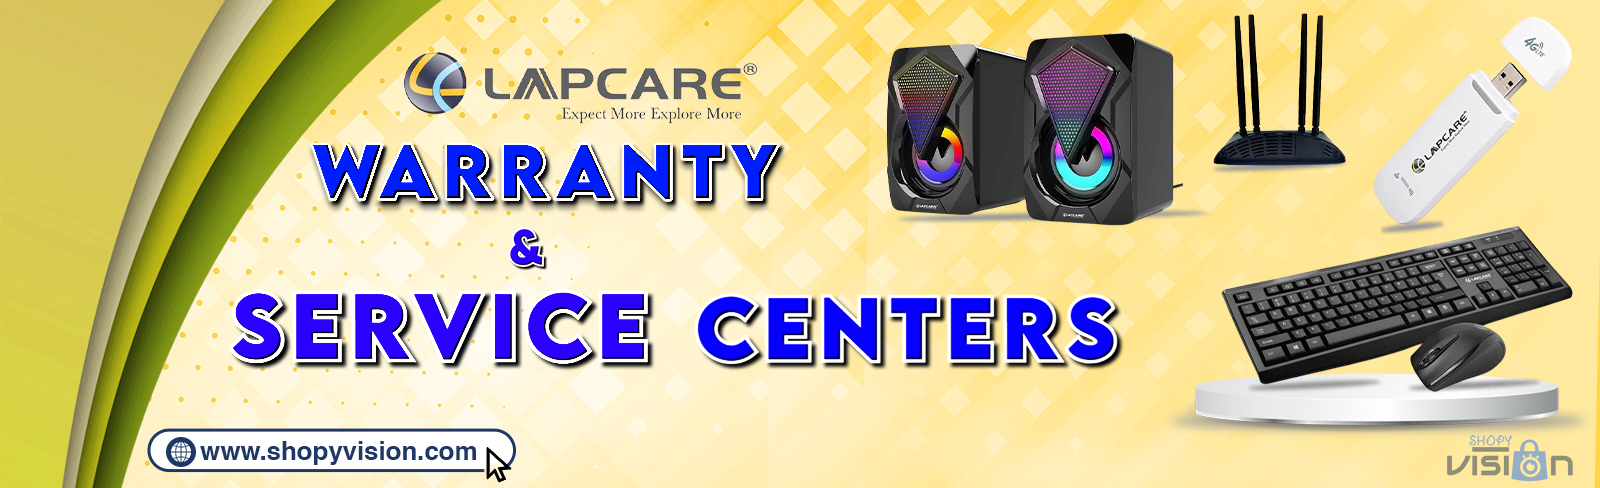 Lapcare Warranty & Service center In India Desktop Banner